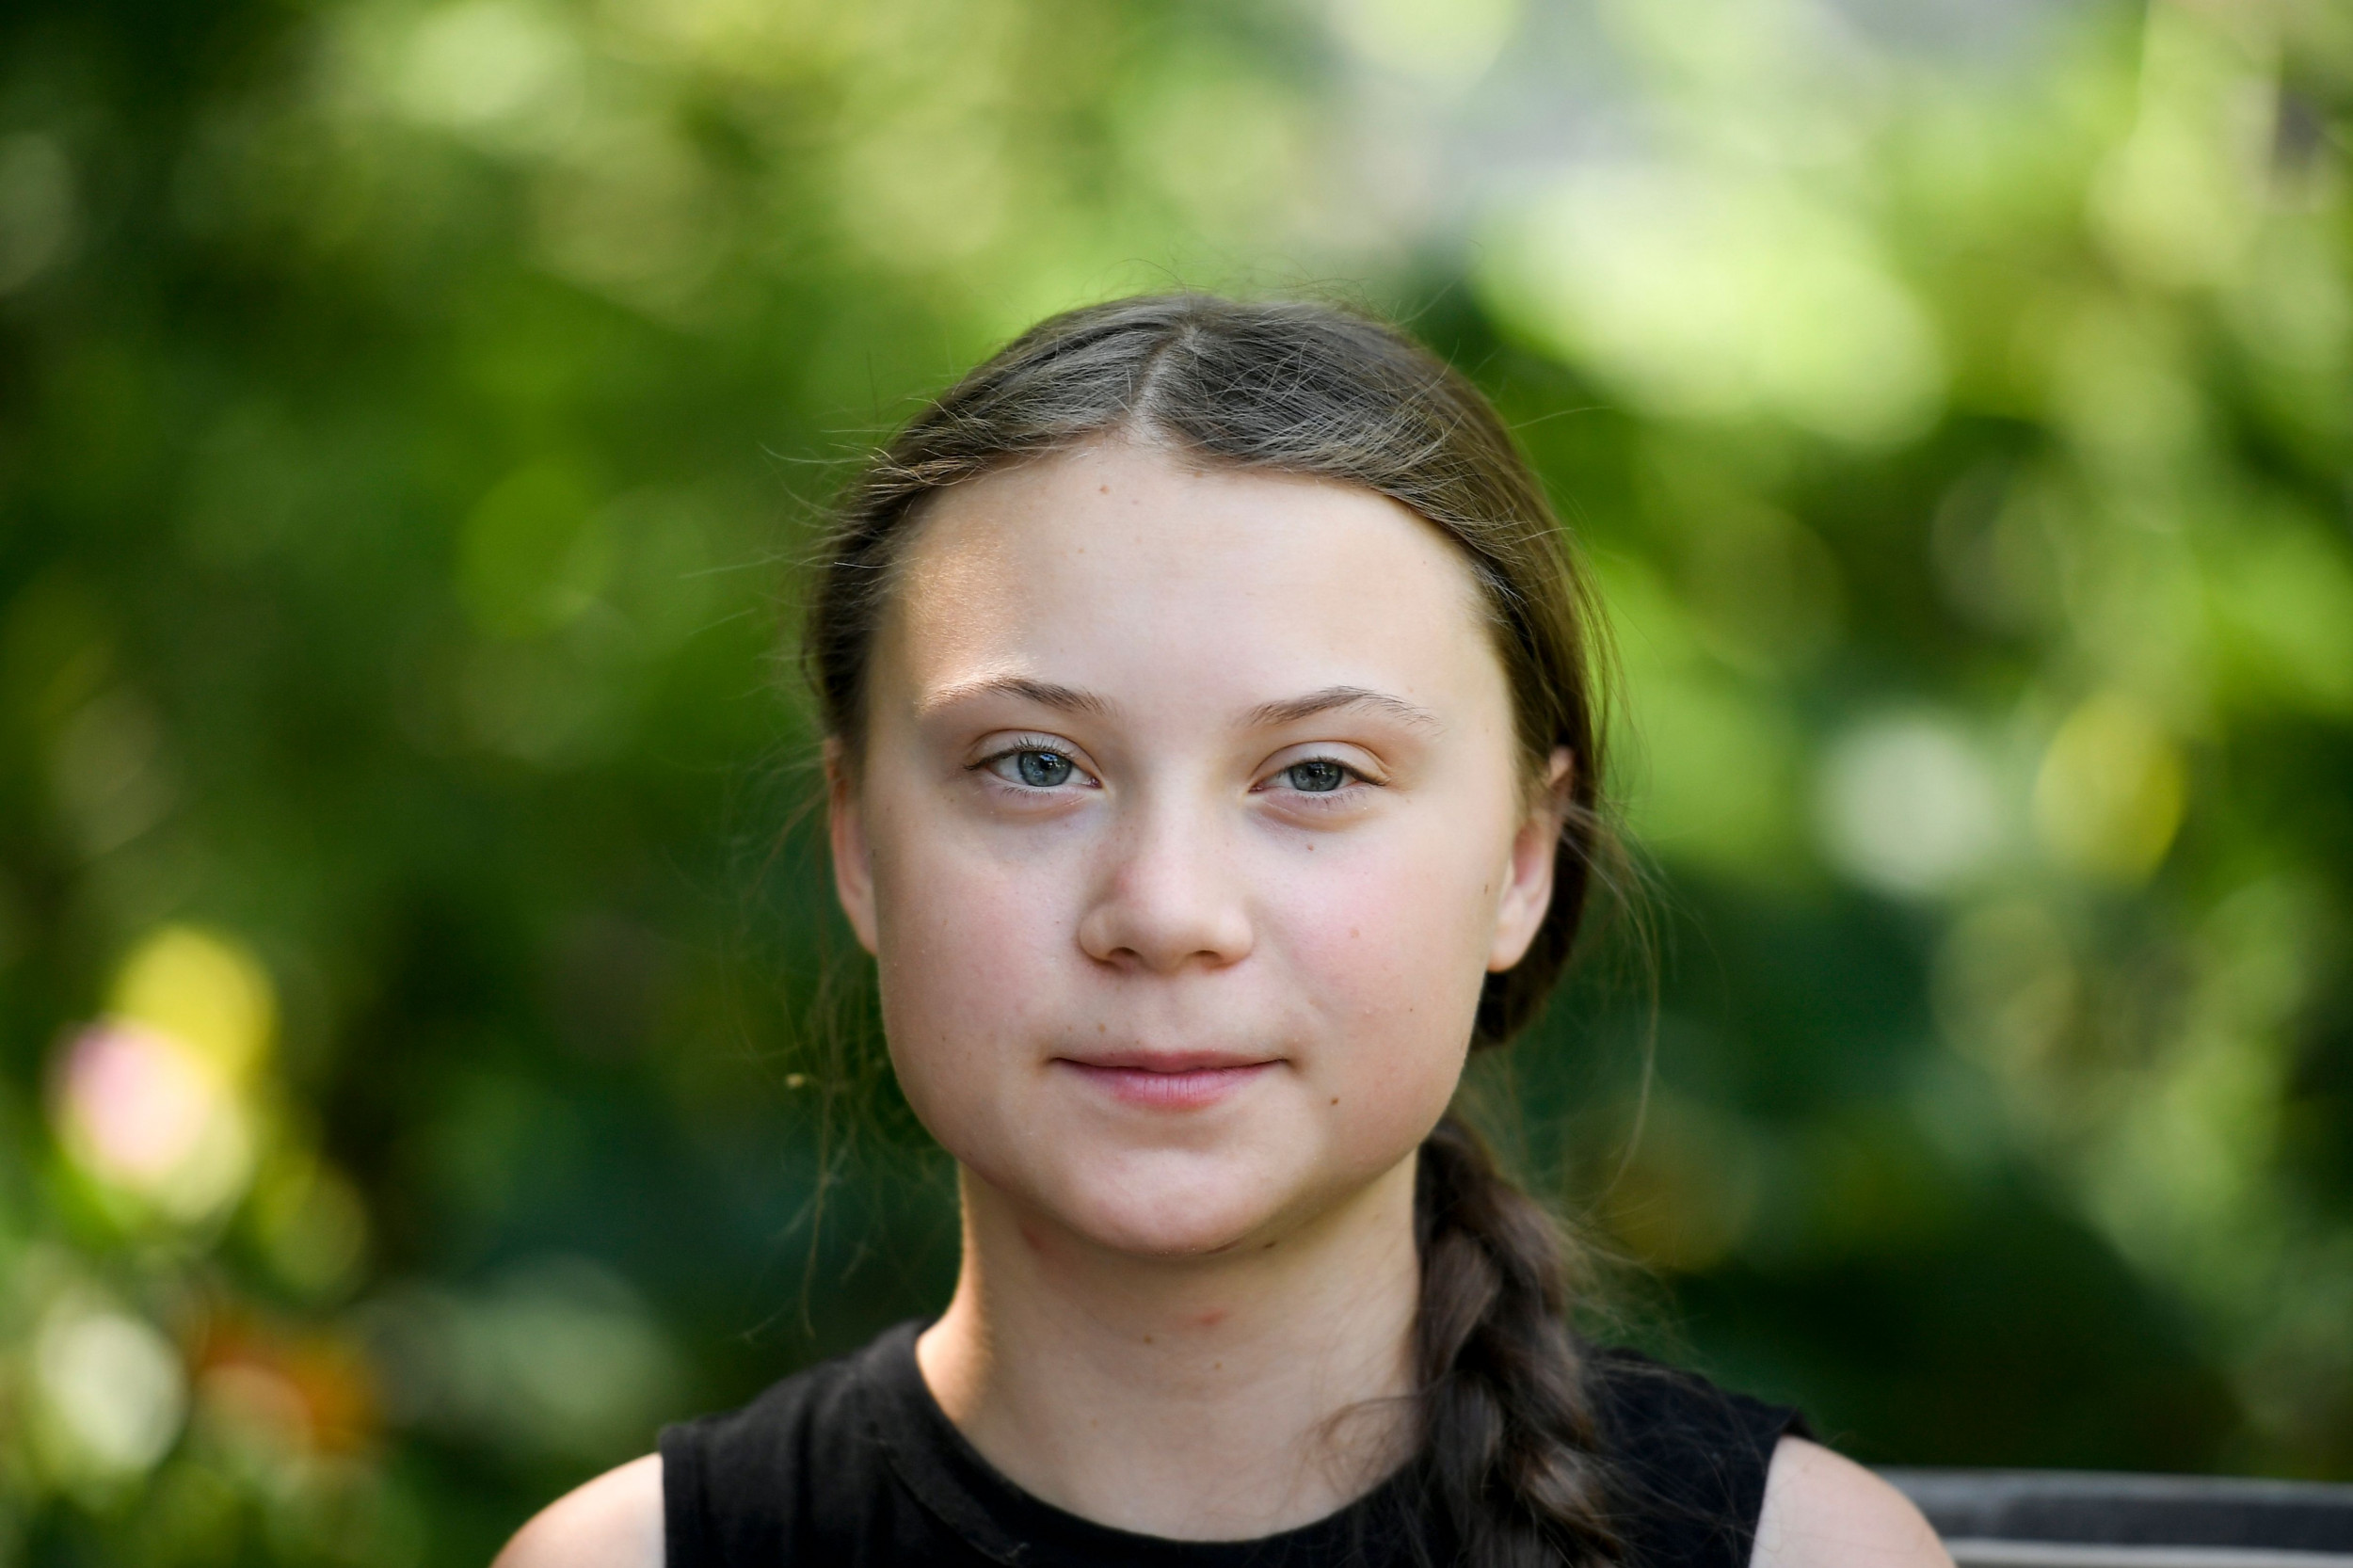 Christian School Principal Sends Newsletter Saying Greta Thunberg Has 